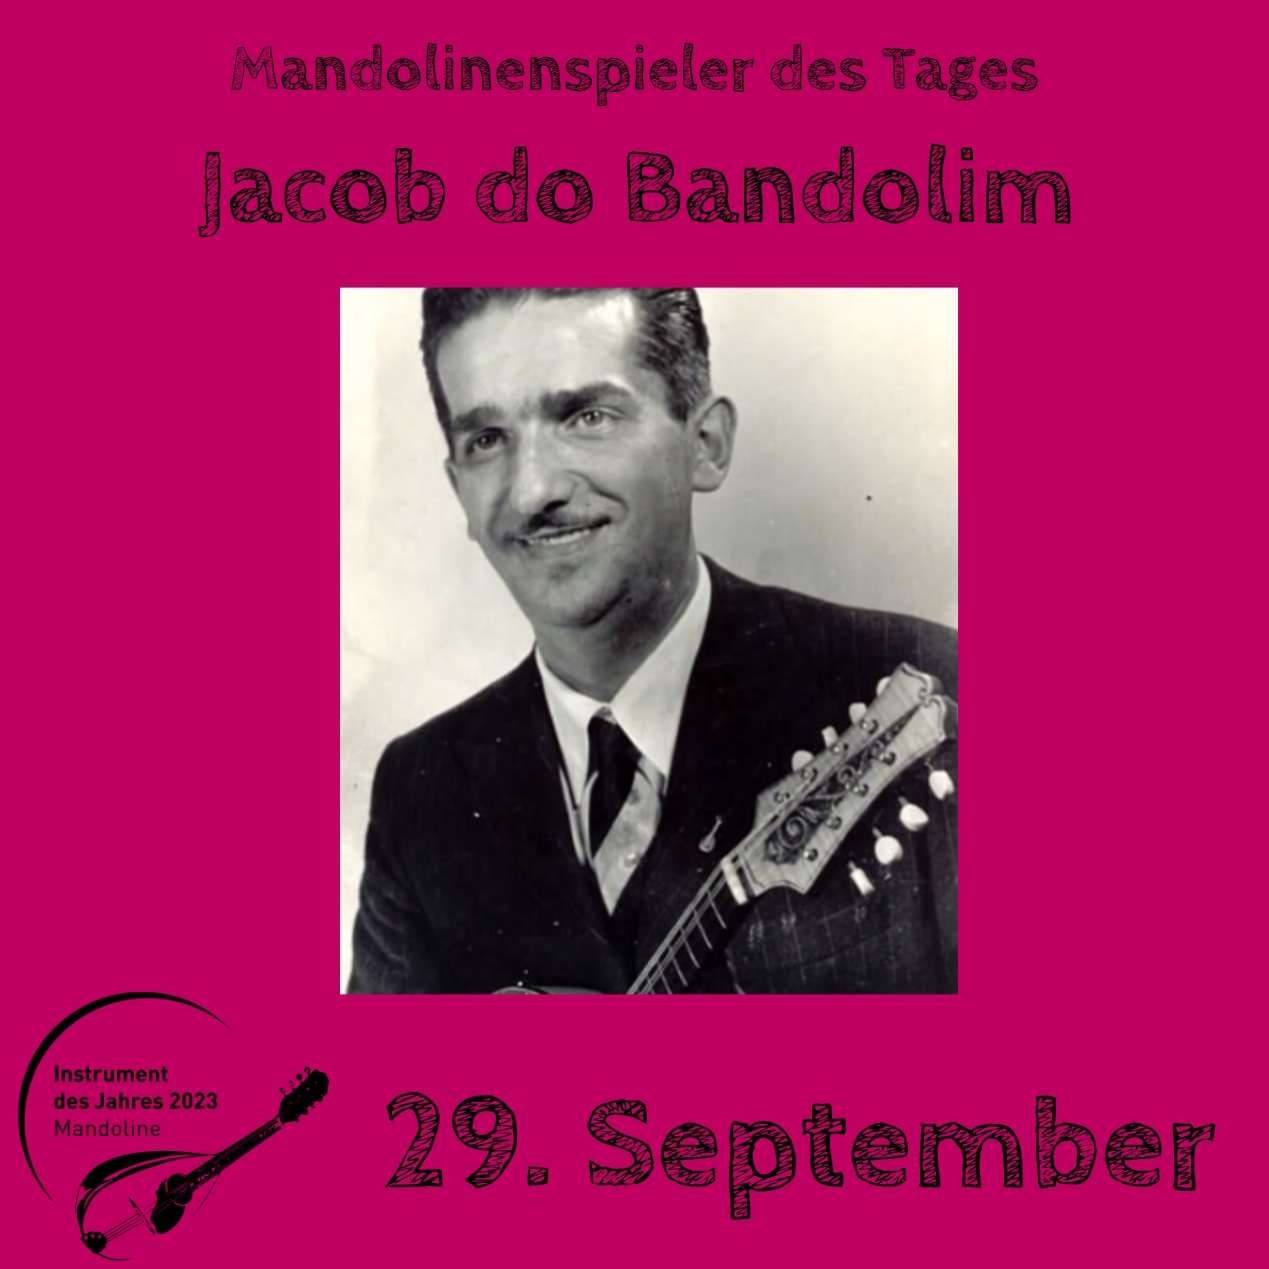 29. September - Jacob do Bandolim Mandoline Instrument des Jahres 2023 Mandolinenspieler Mandolinenspielerin des Tages